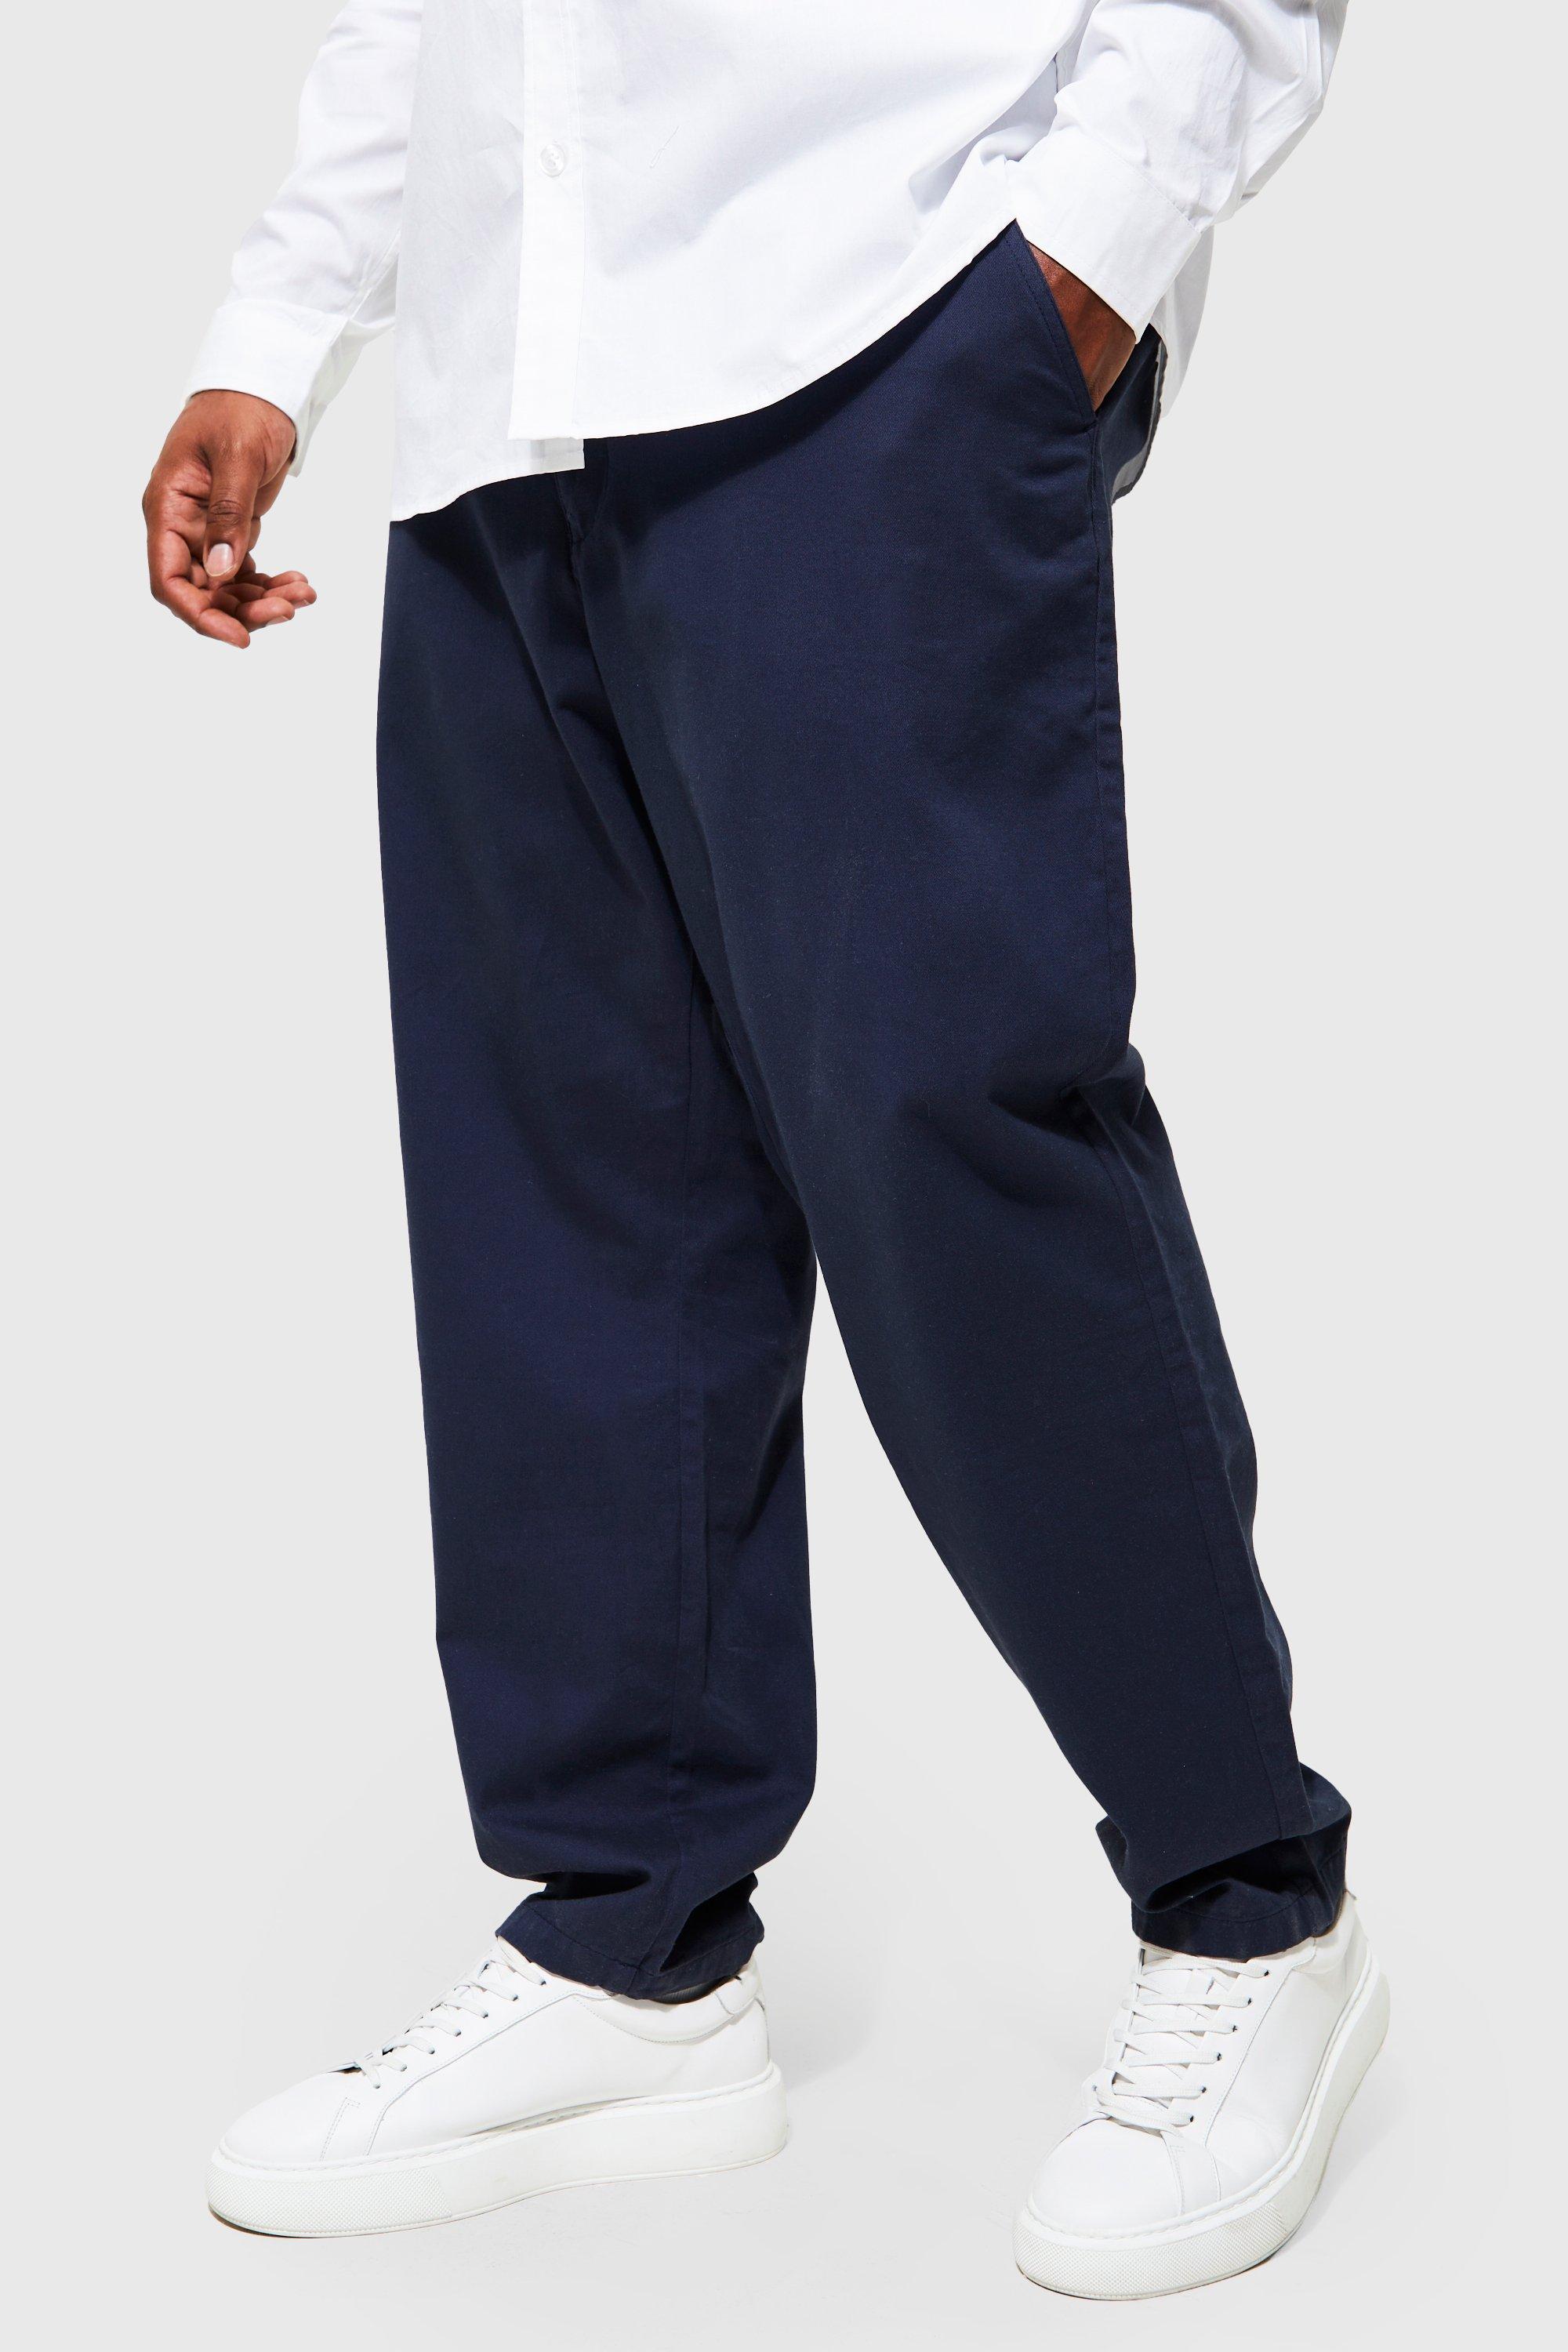 grande taille - pantalon chino coupe slim homme - bleu - xxl, bleu